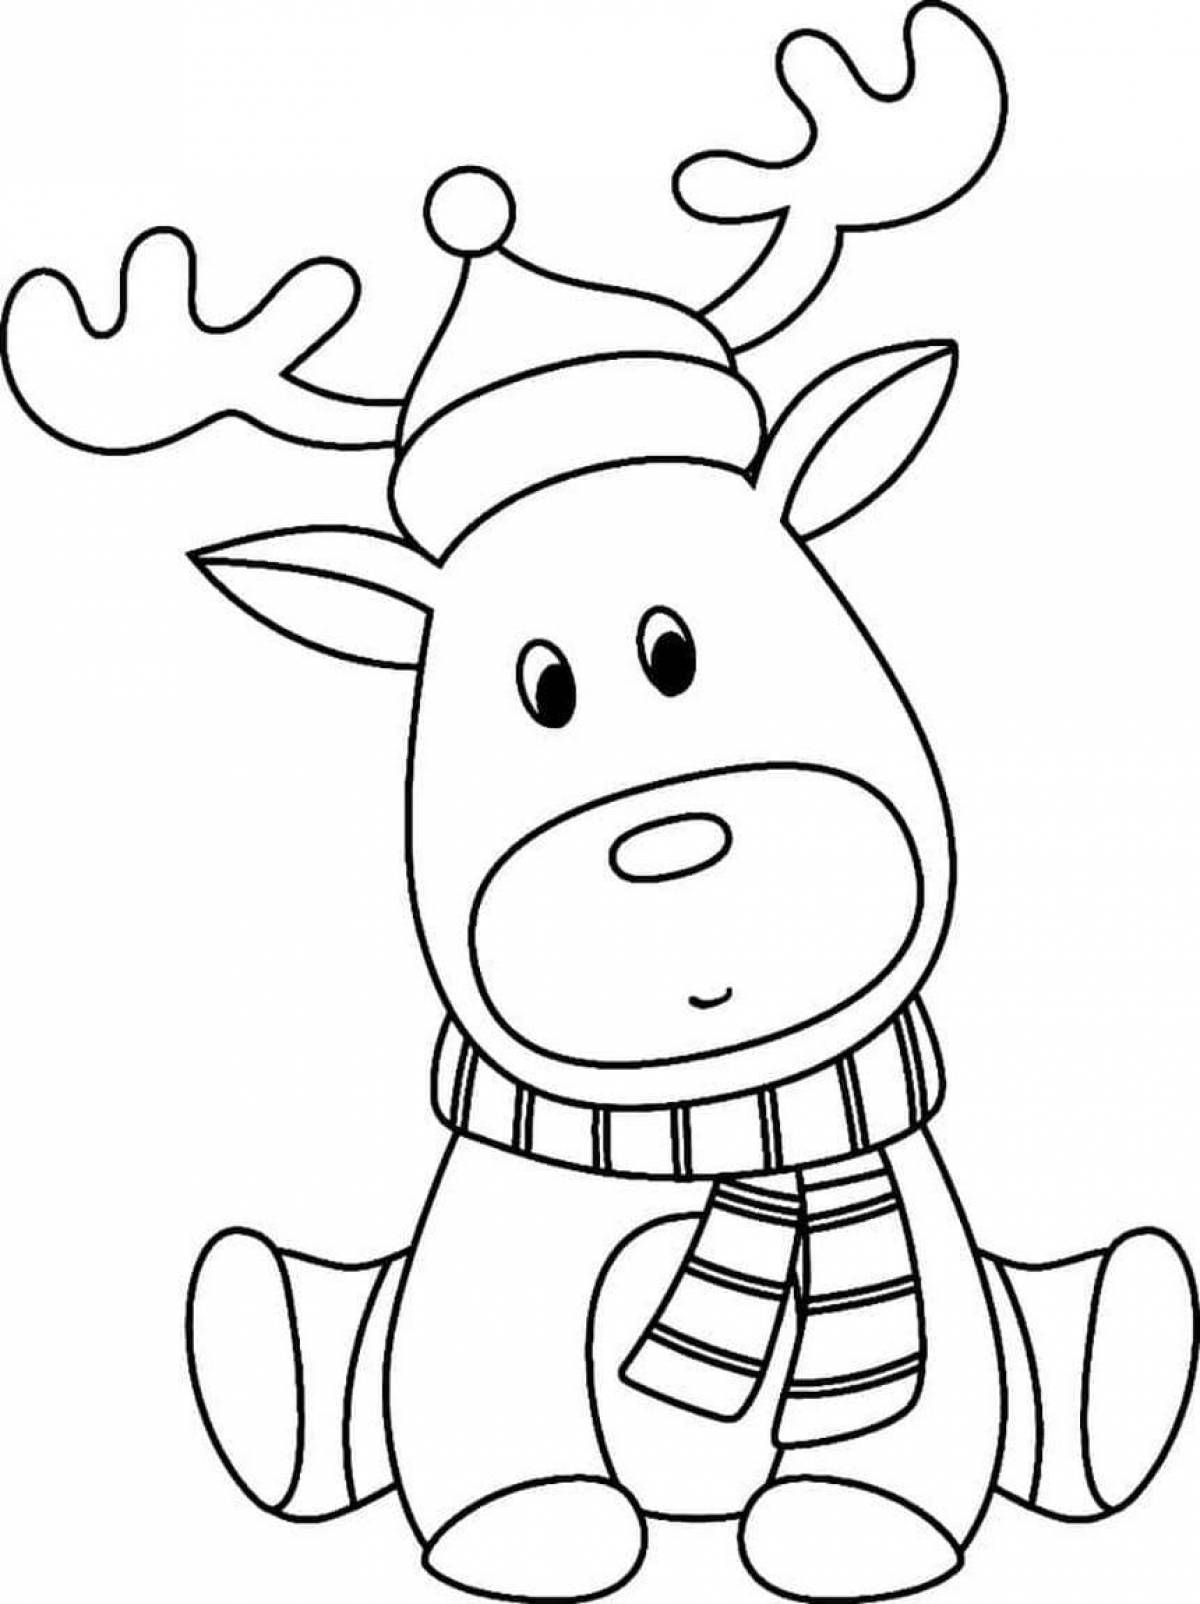 Coloring book of a joyful Christmas deer